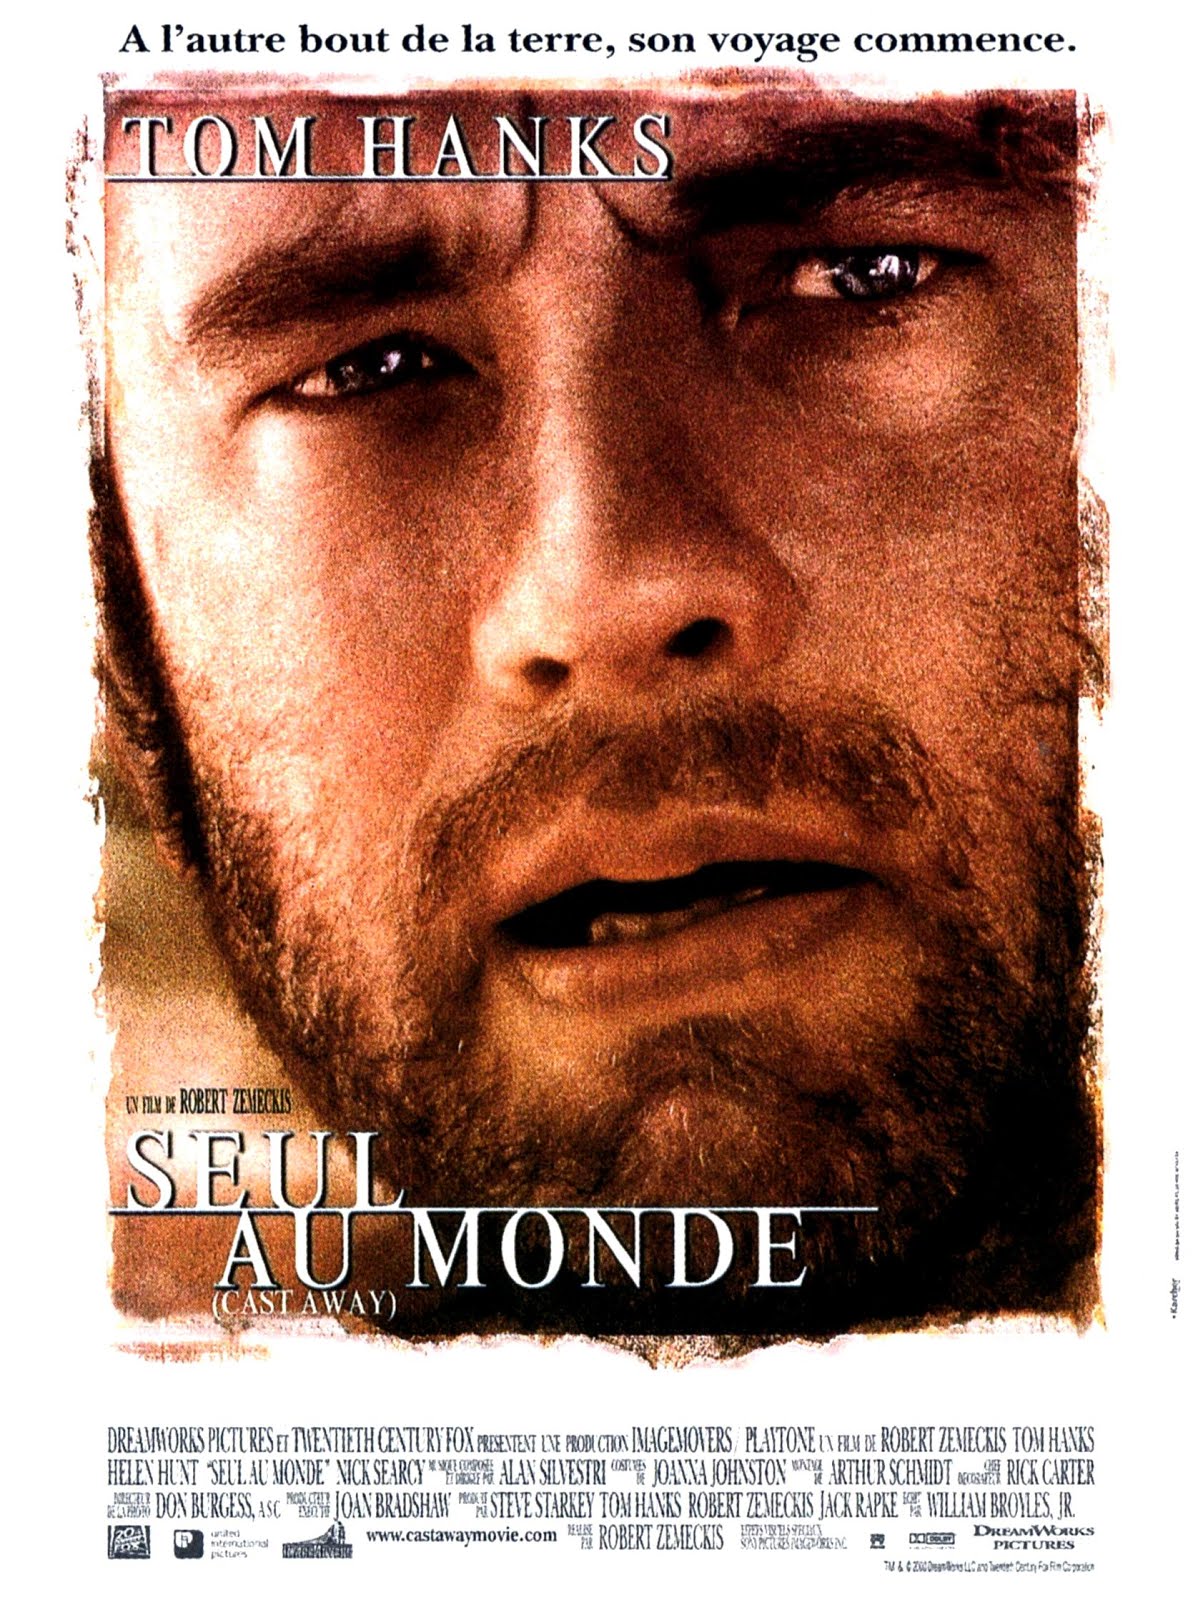 Seul au monde (2000) Robert Zemeckis - Cast away (01.1999 / 2000)